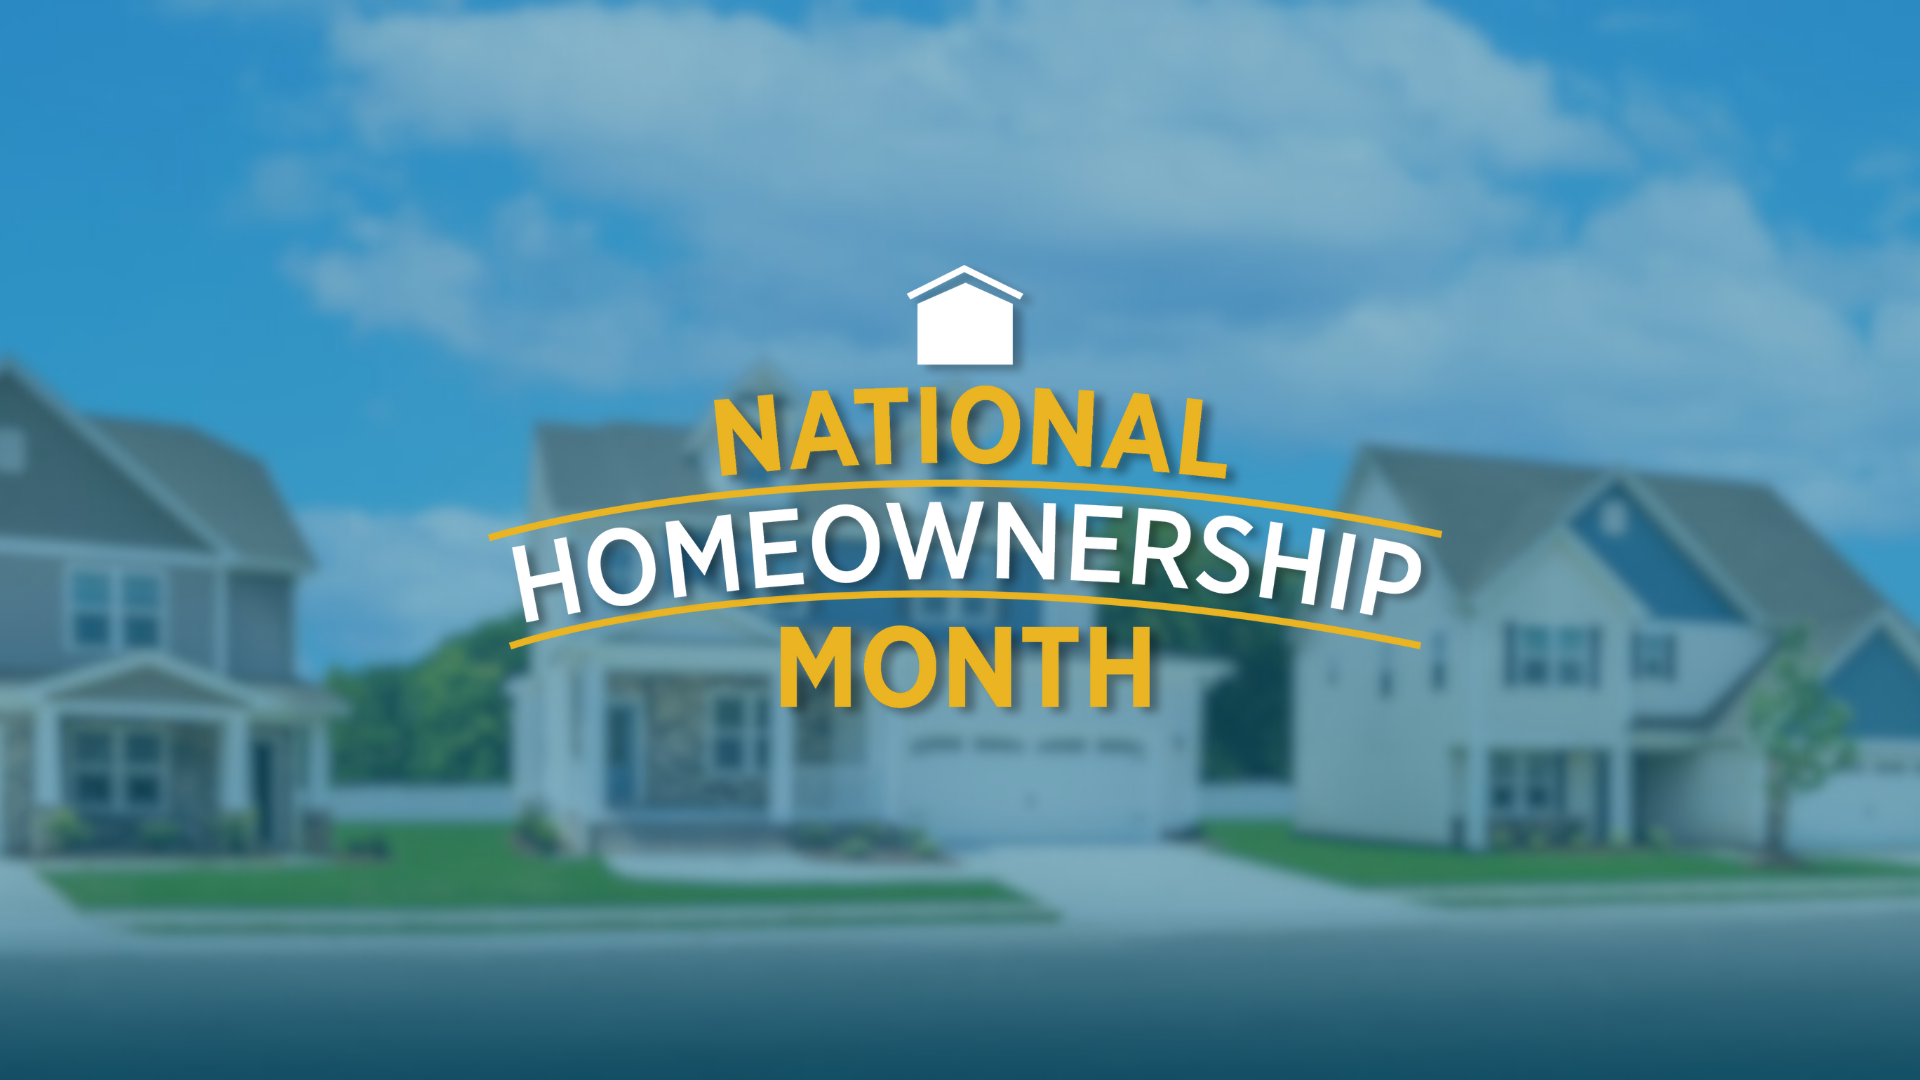 LGI Homes celebrates National Homeownership Month